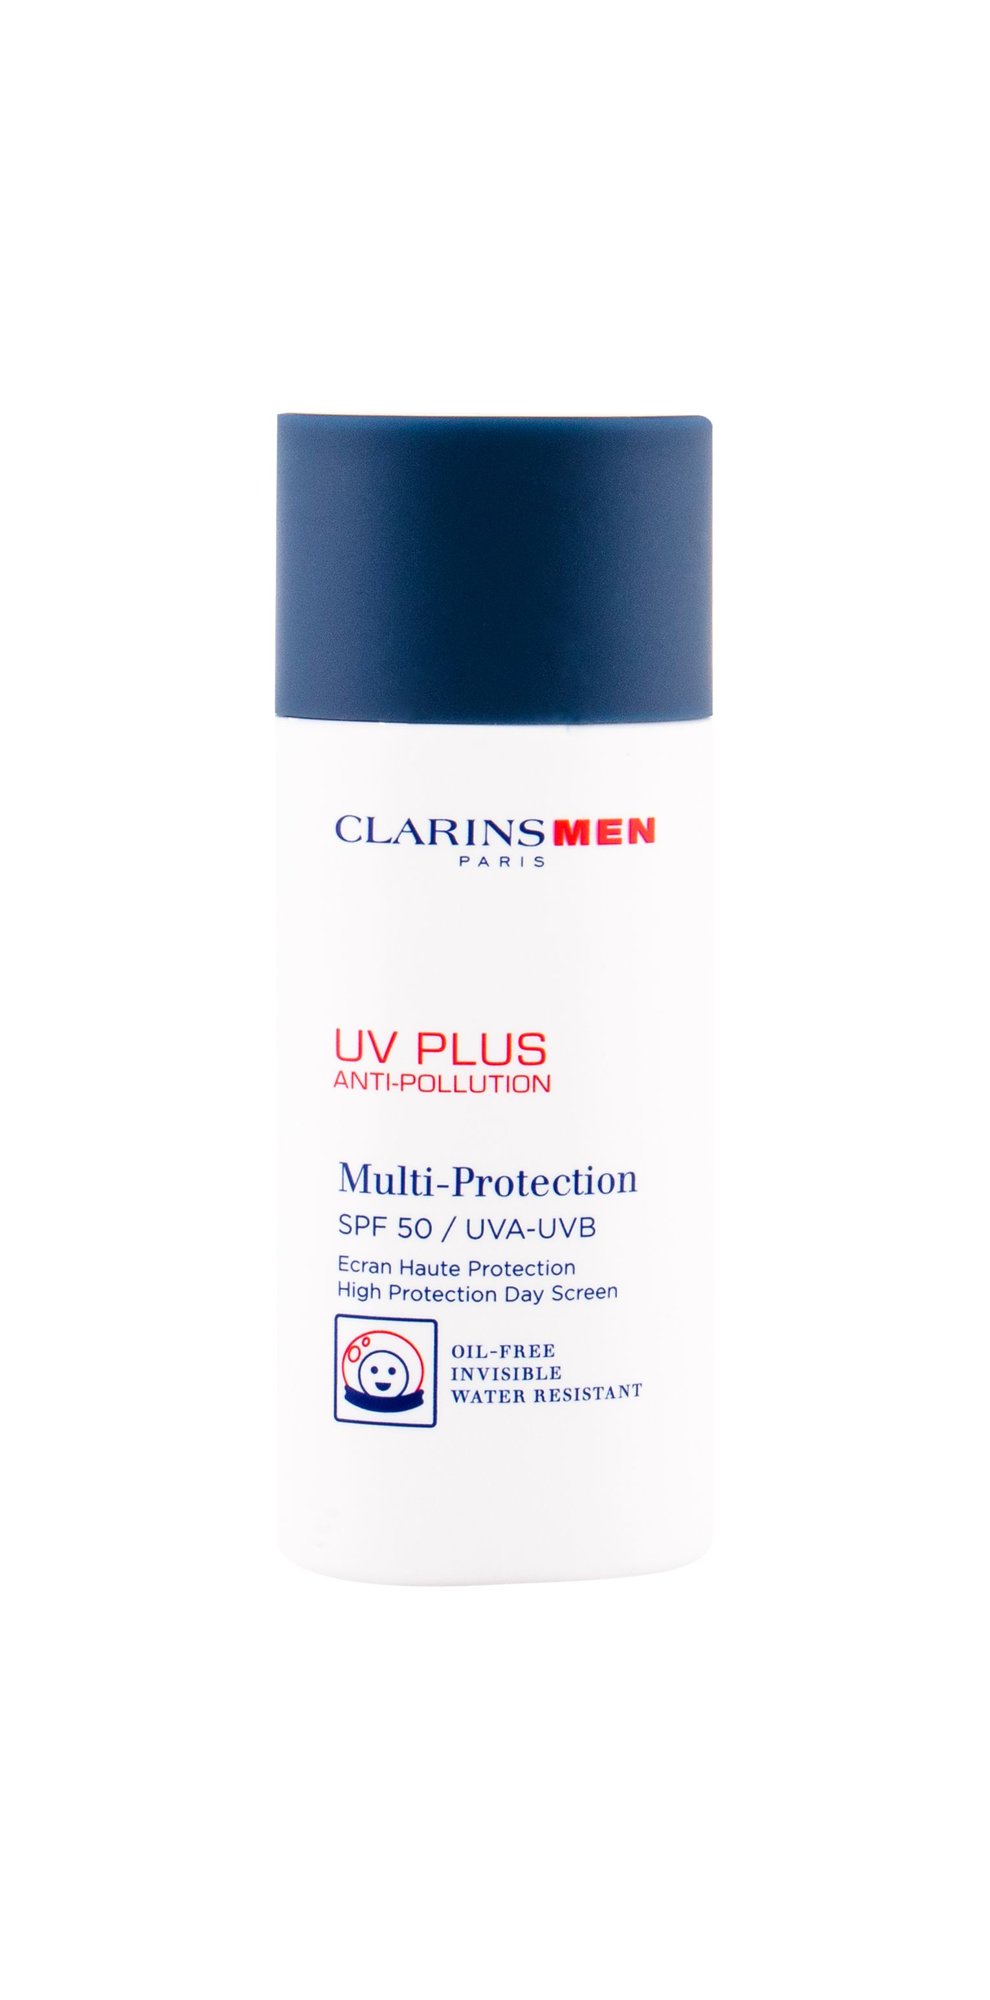 Clarins Men UV Plus Multi-Protection veido apsauga